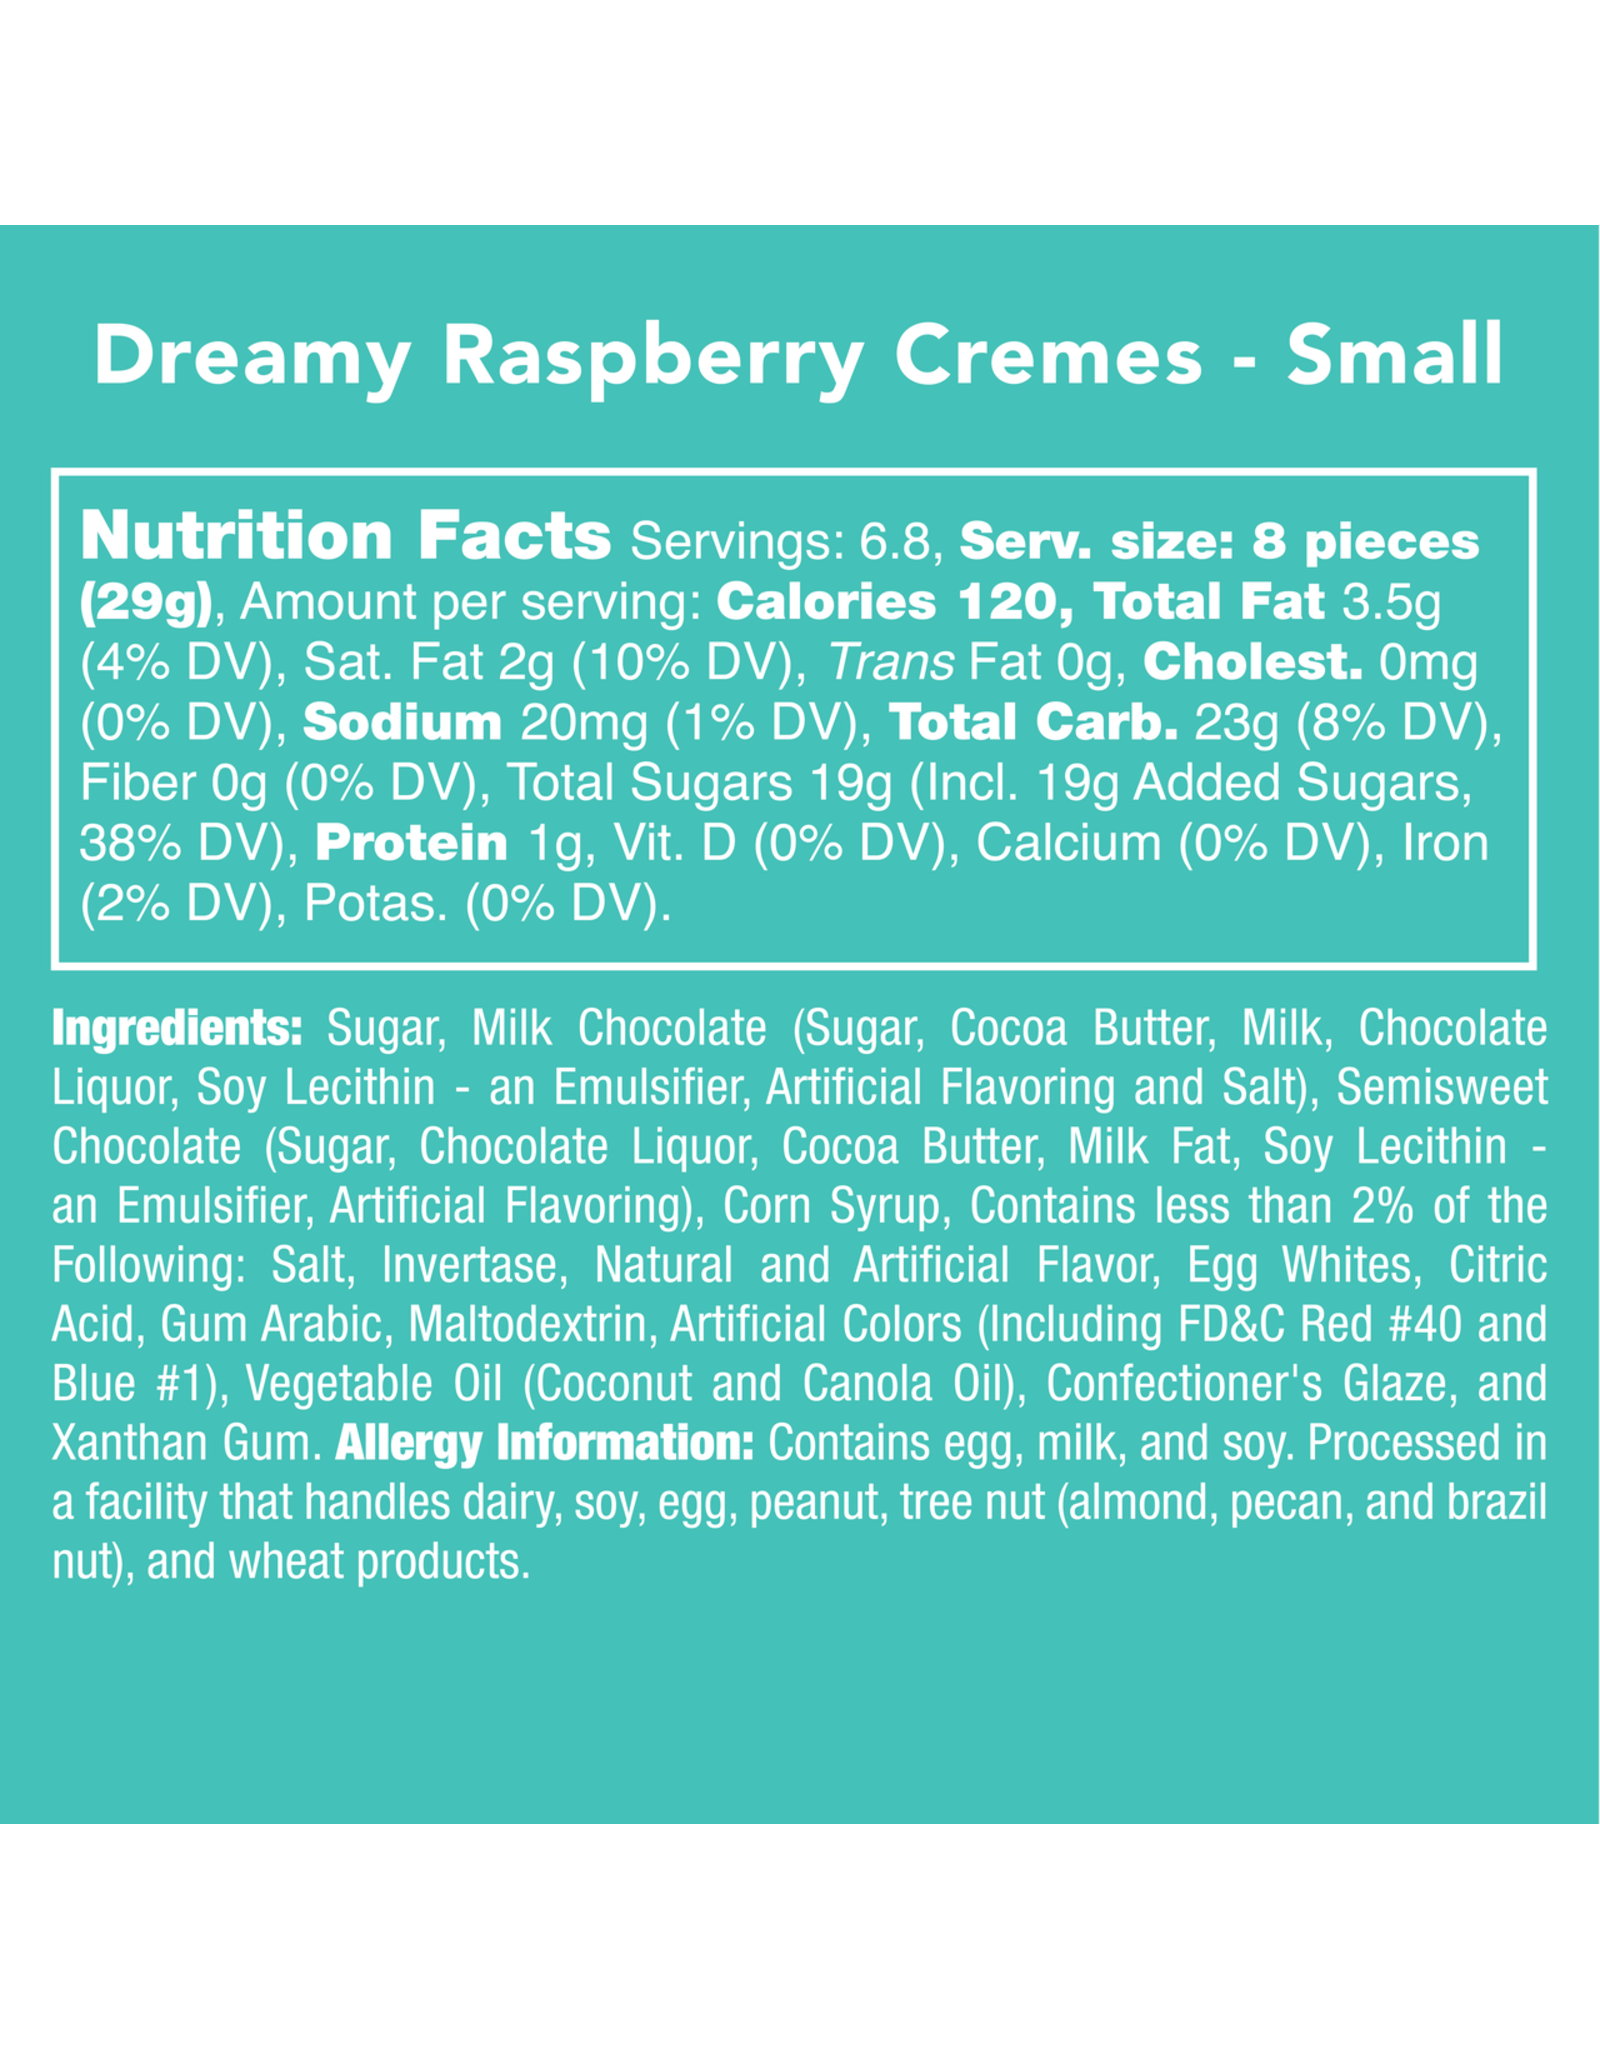 Dreamy Raspberry Cremes